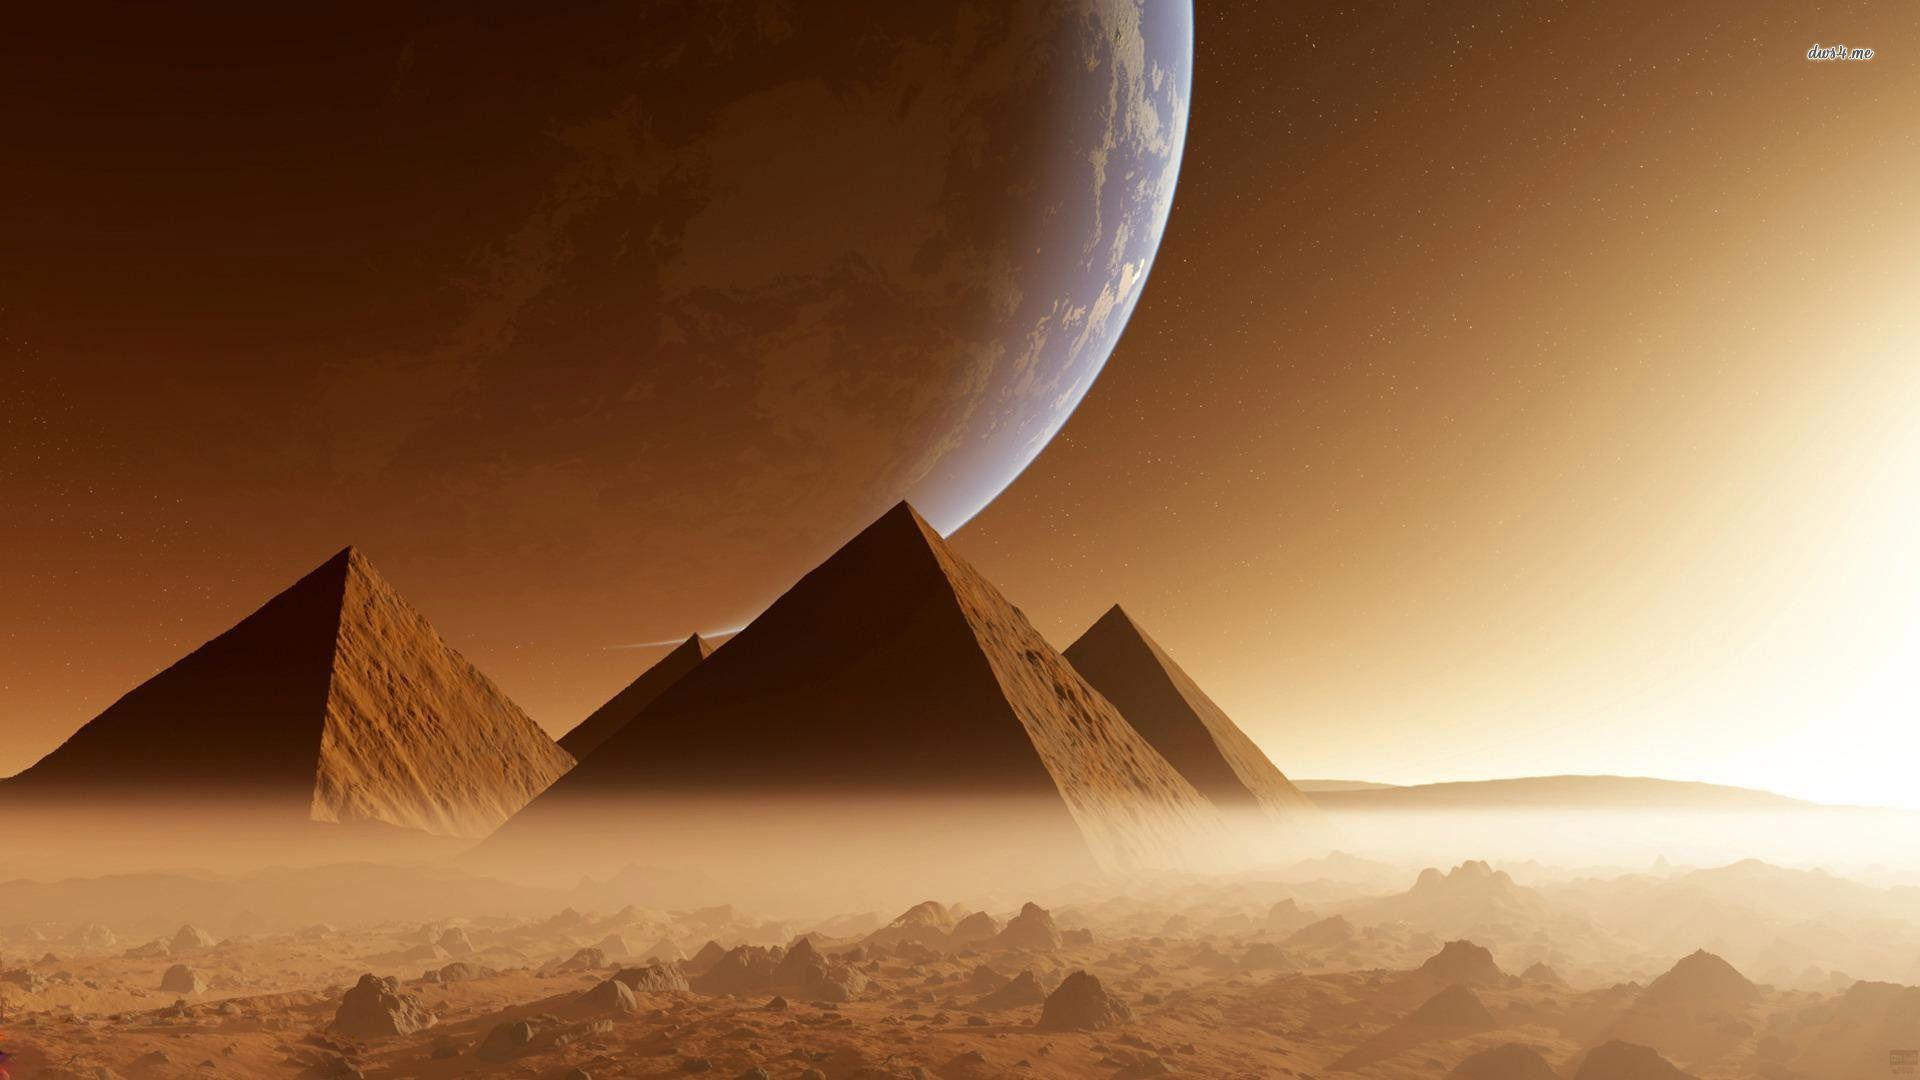 9942 Pyramids On Alien Planet